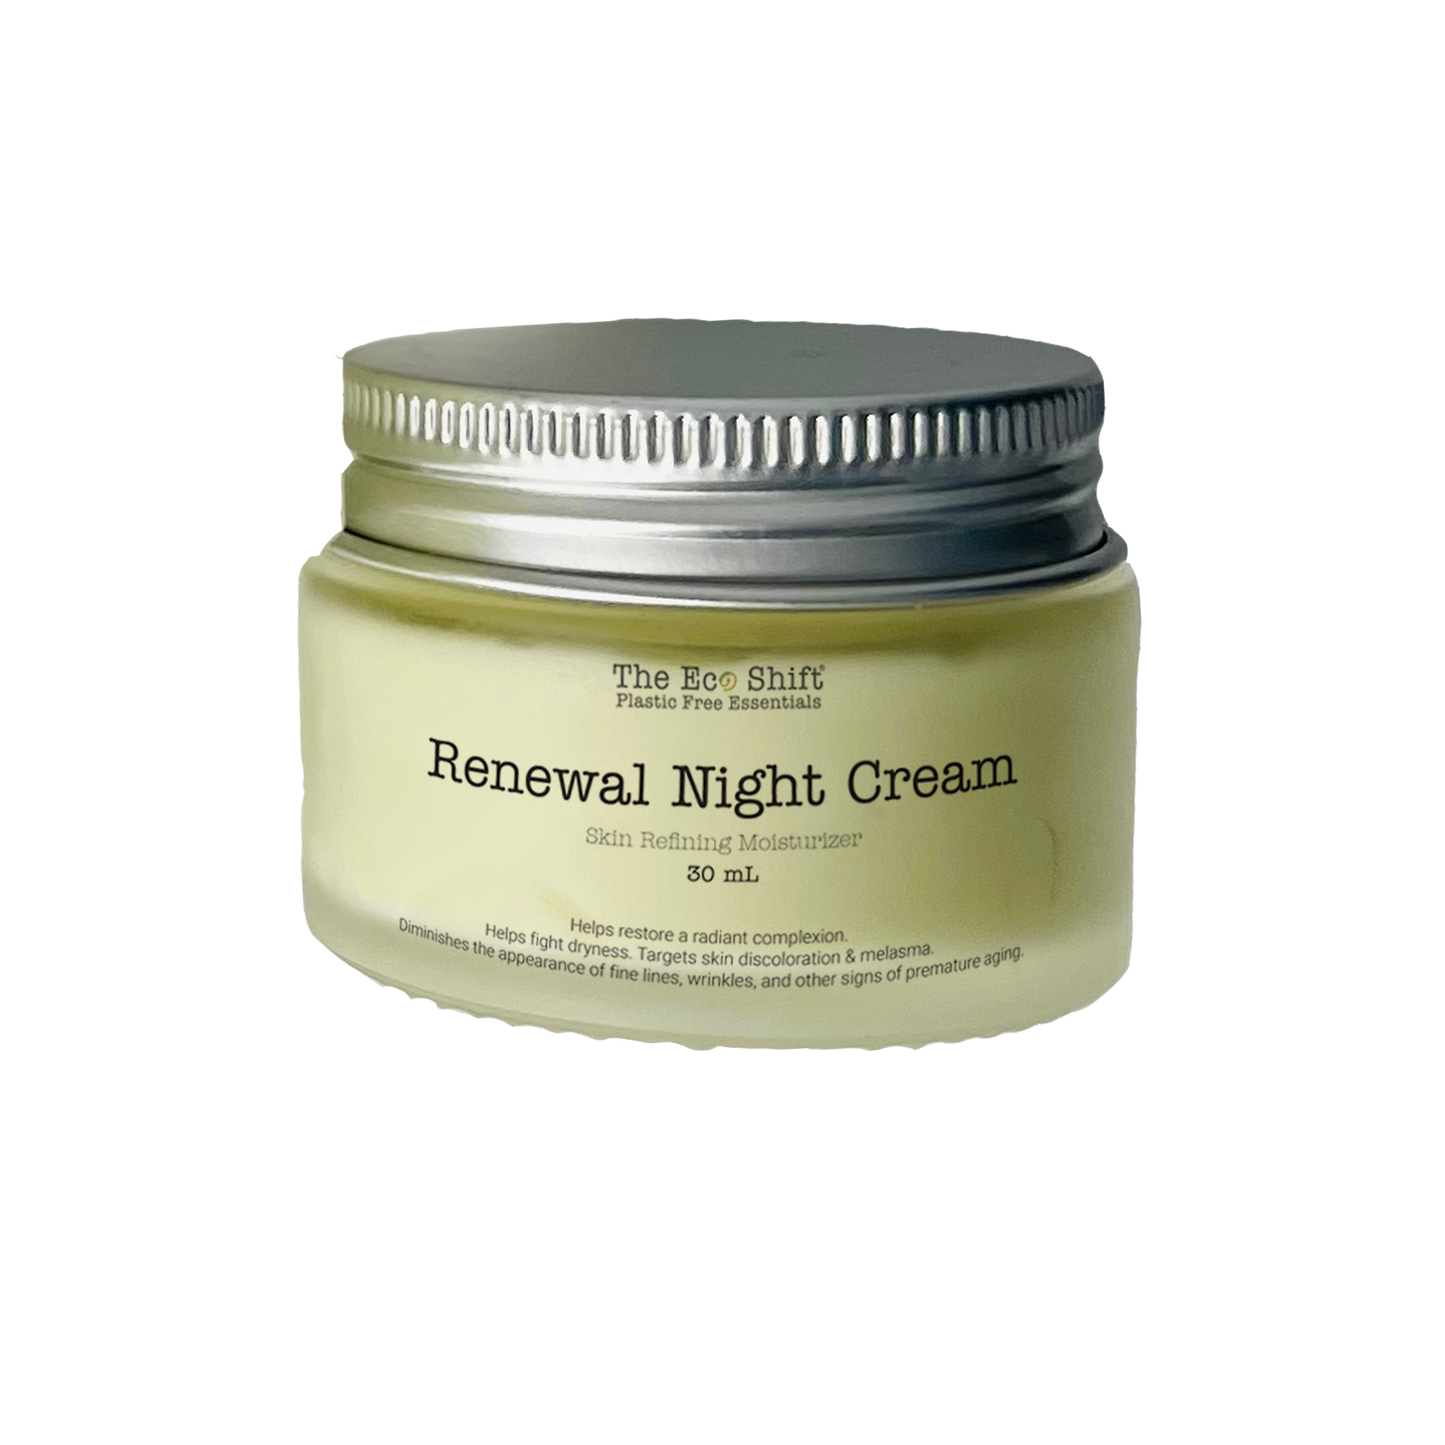 Anti Ageing Renewal Night Cream with Retinol and Niacinamide